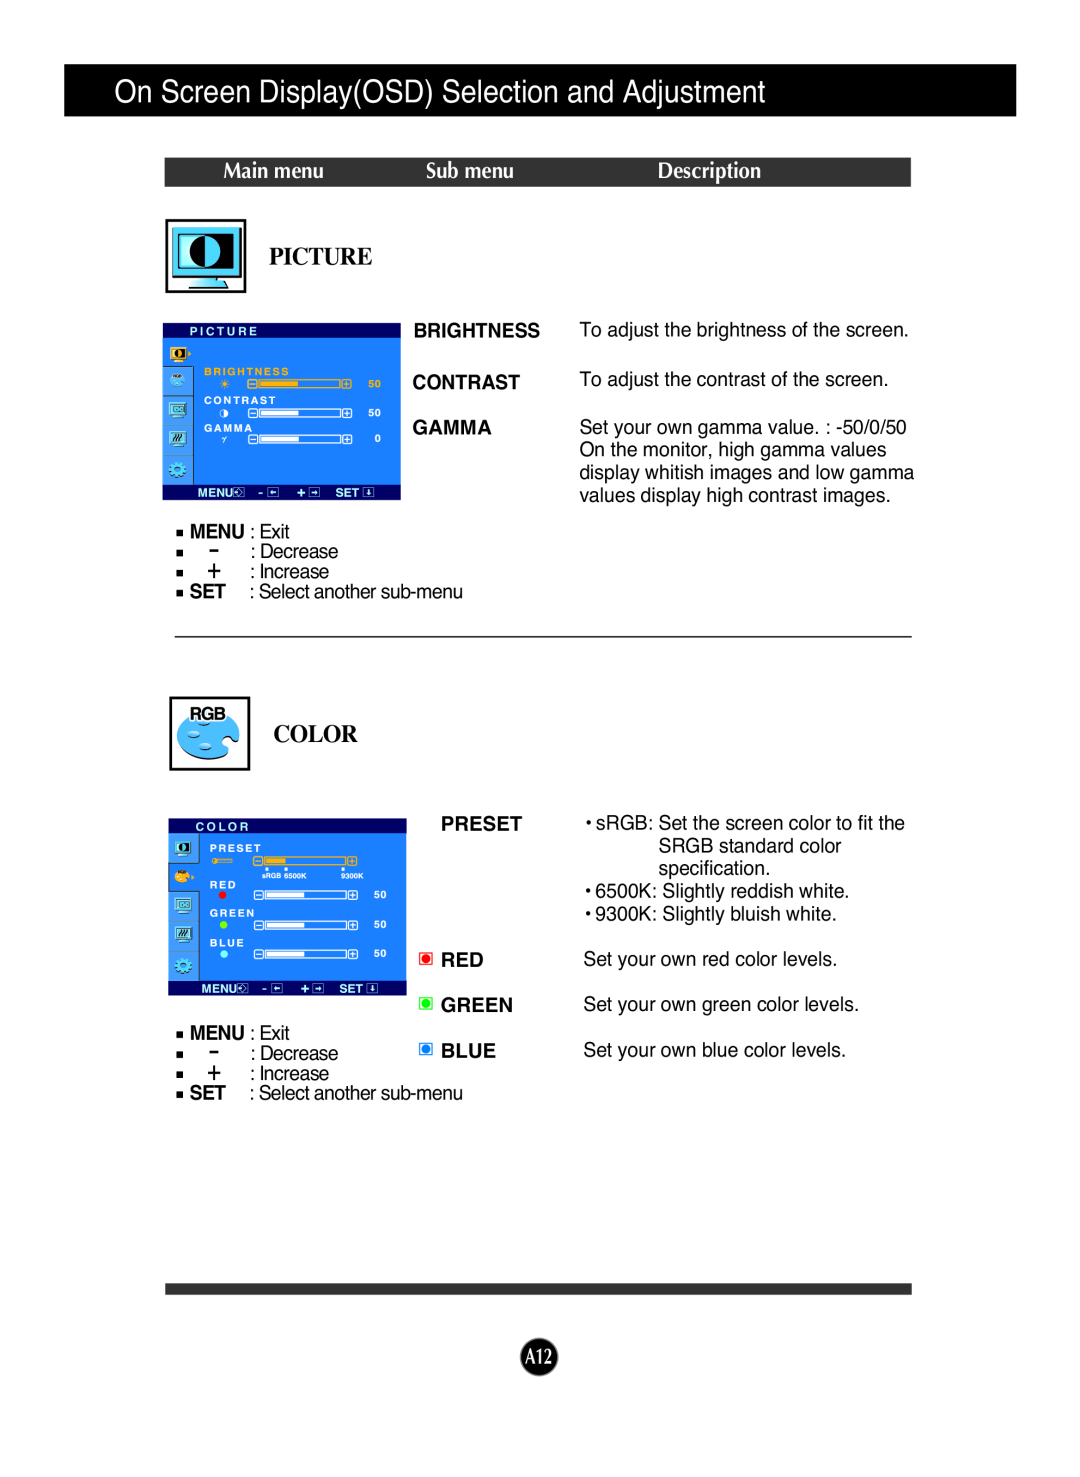 LG Electronics L227WTP Picture, Color, Main menu, Sub menu, Description, On Screen DisplayOSD Selection and Adjustment 